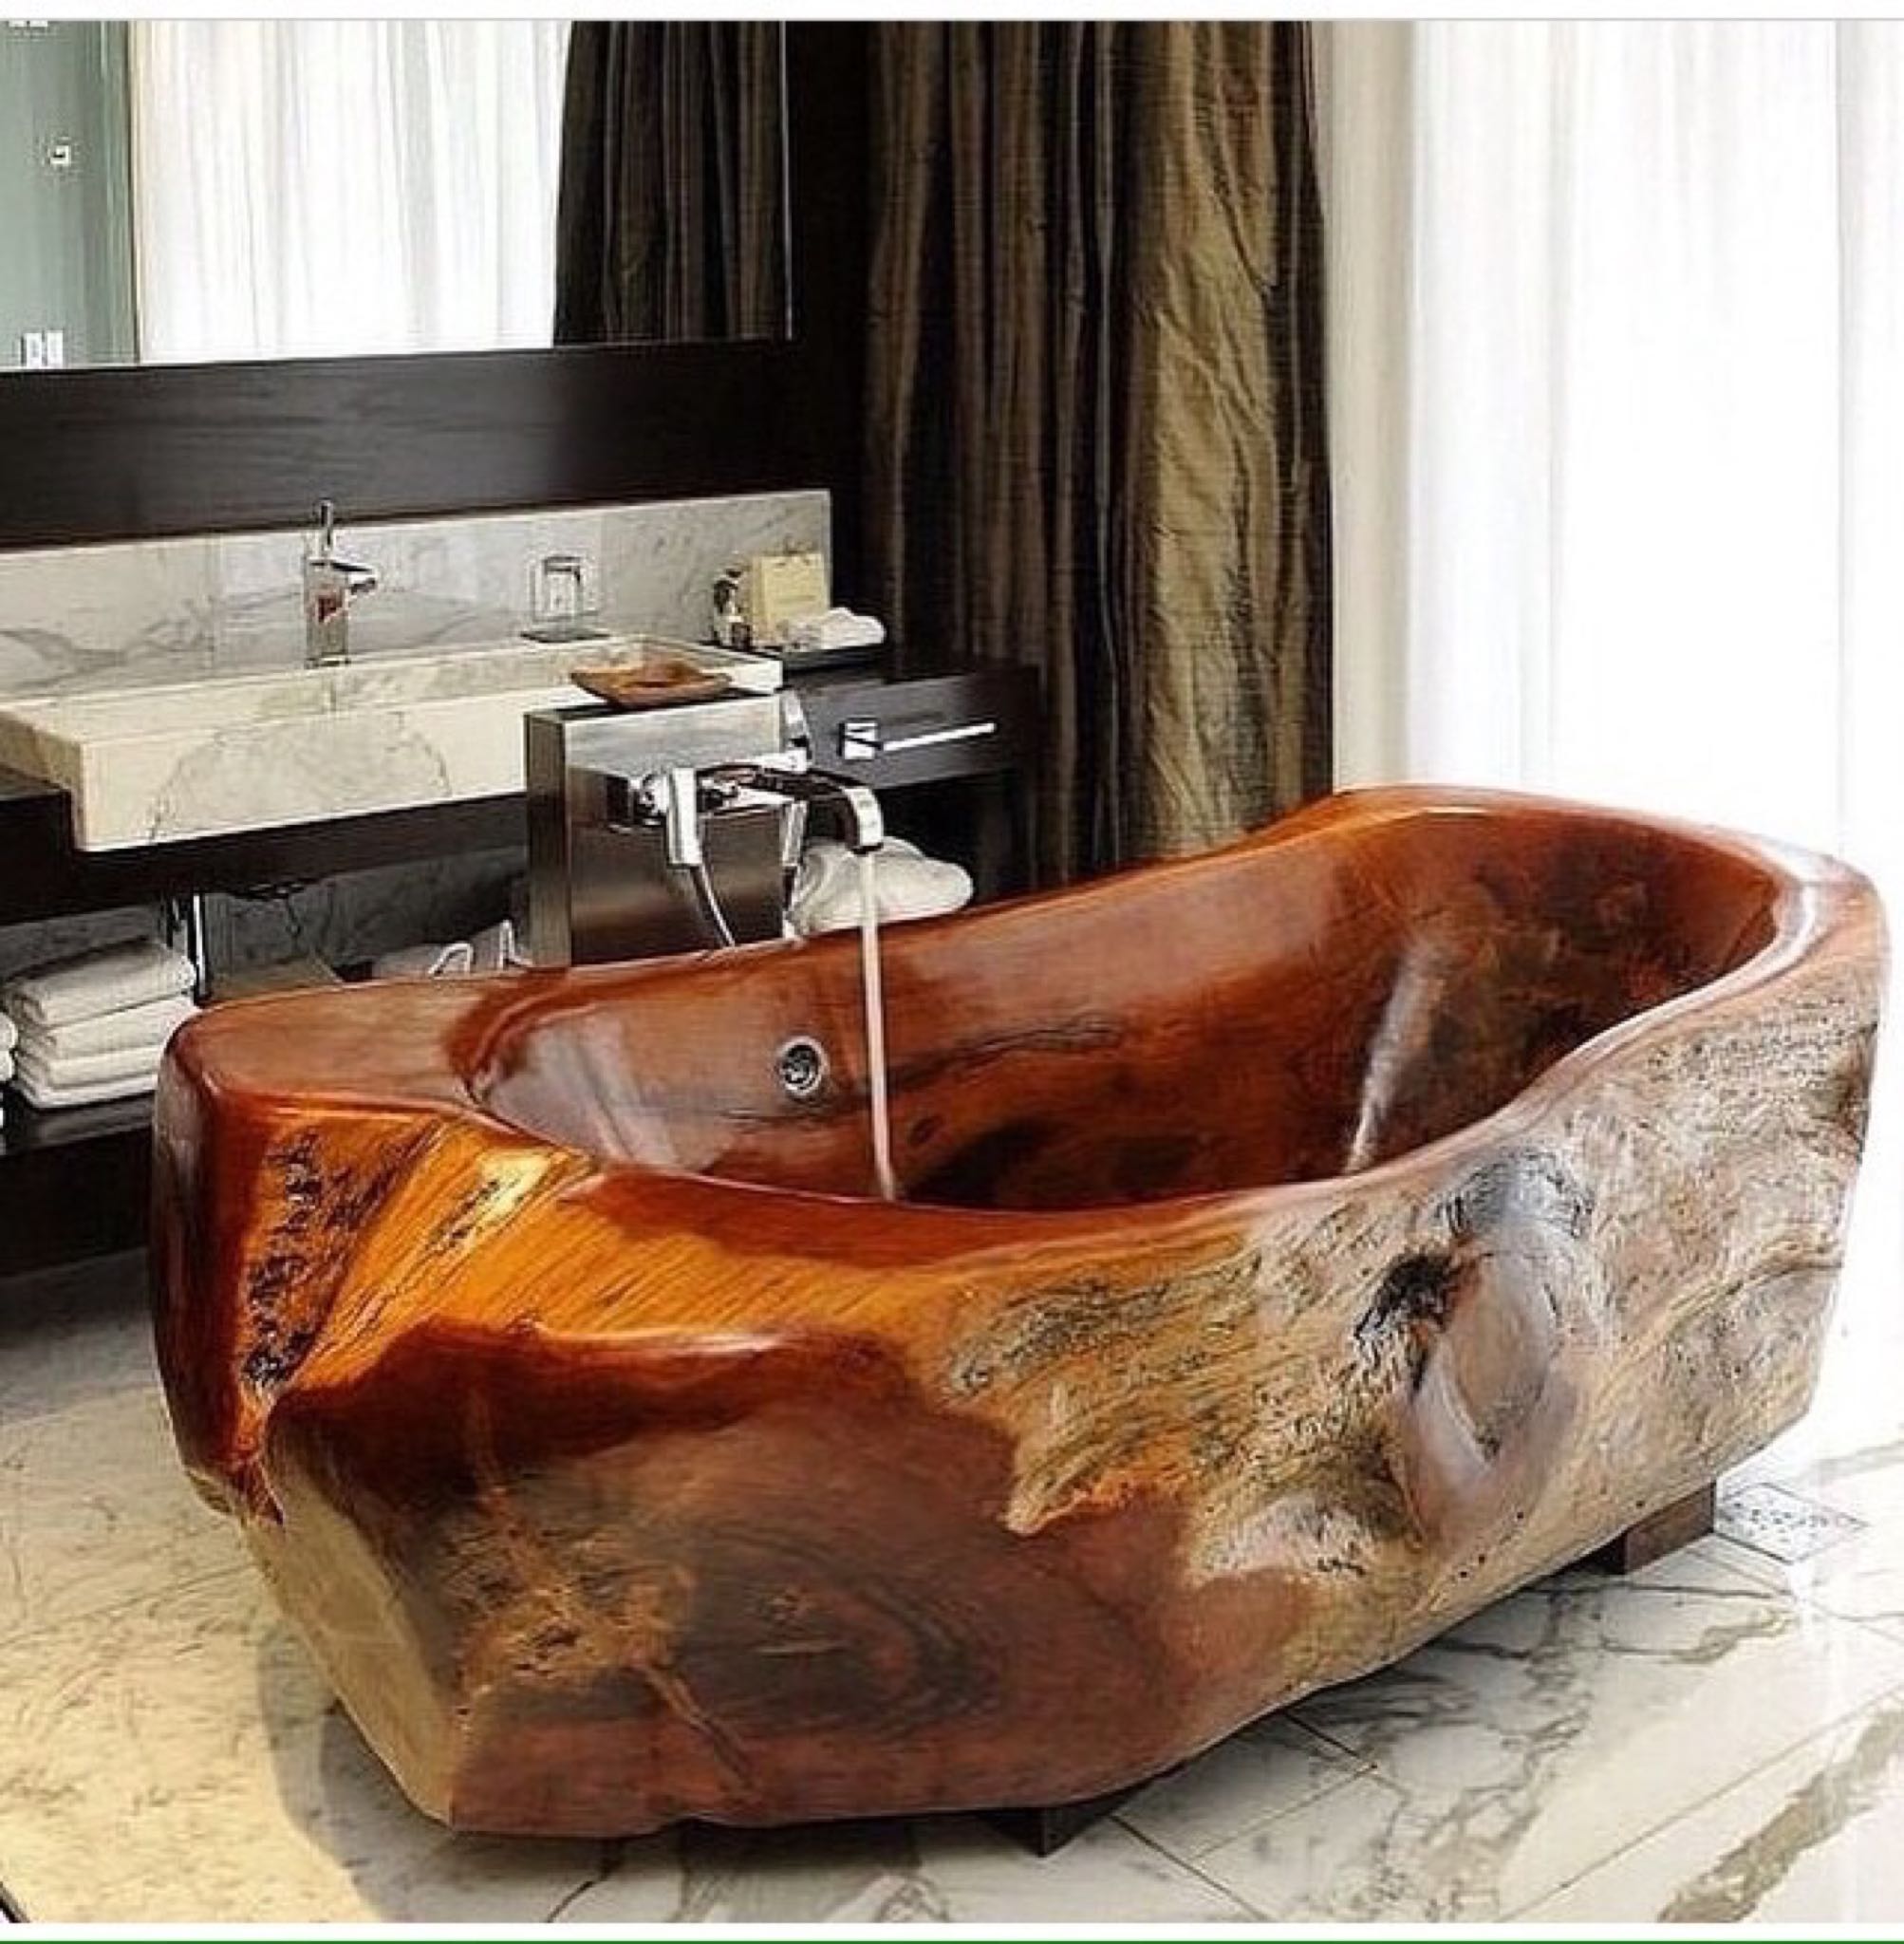 Amazing Bathrooms With Wooden Bathtub (14)